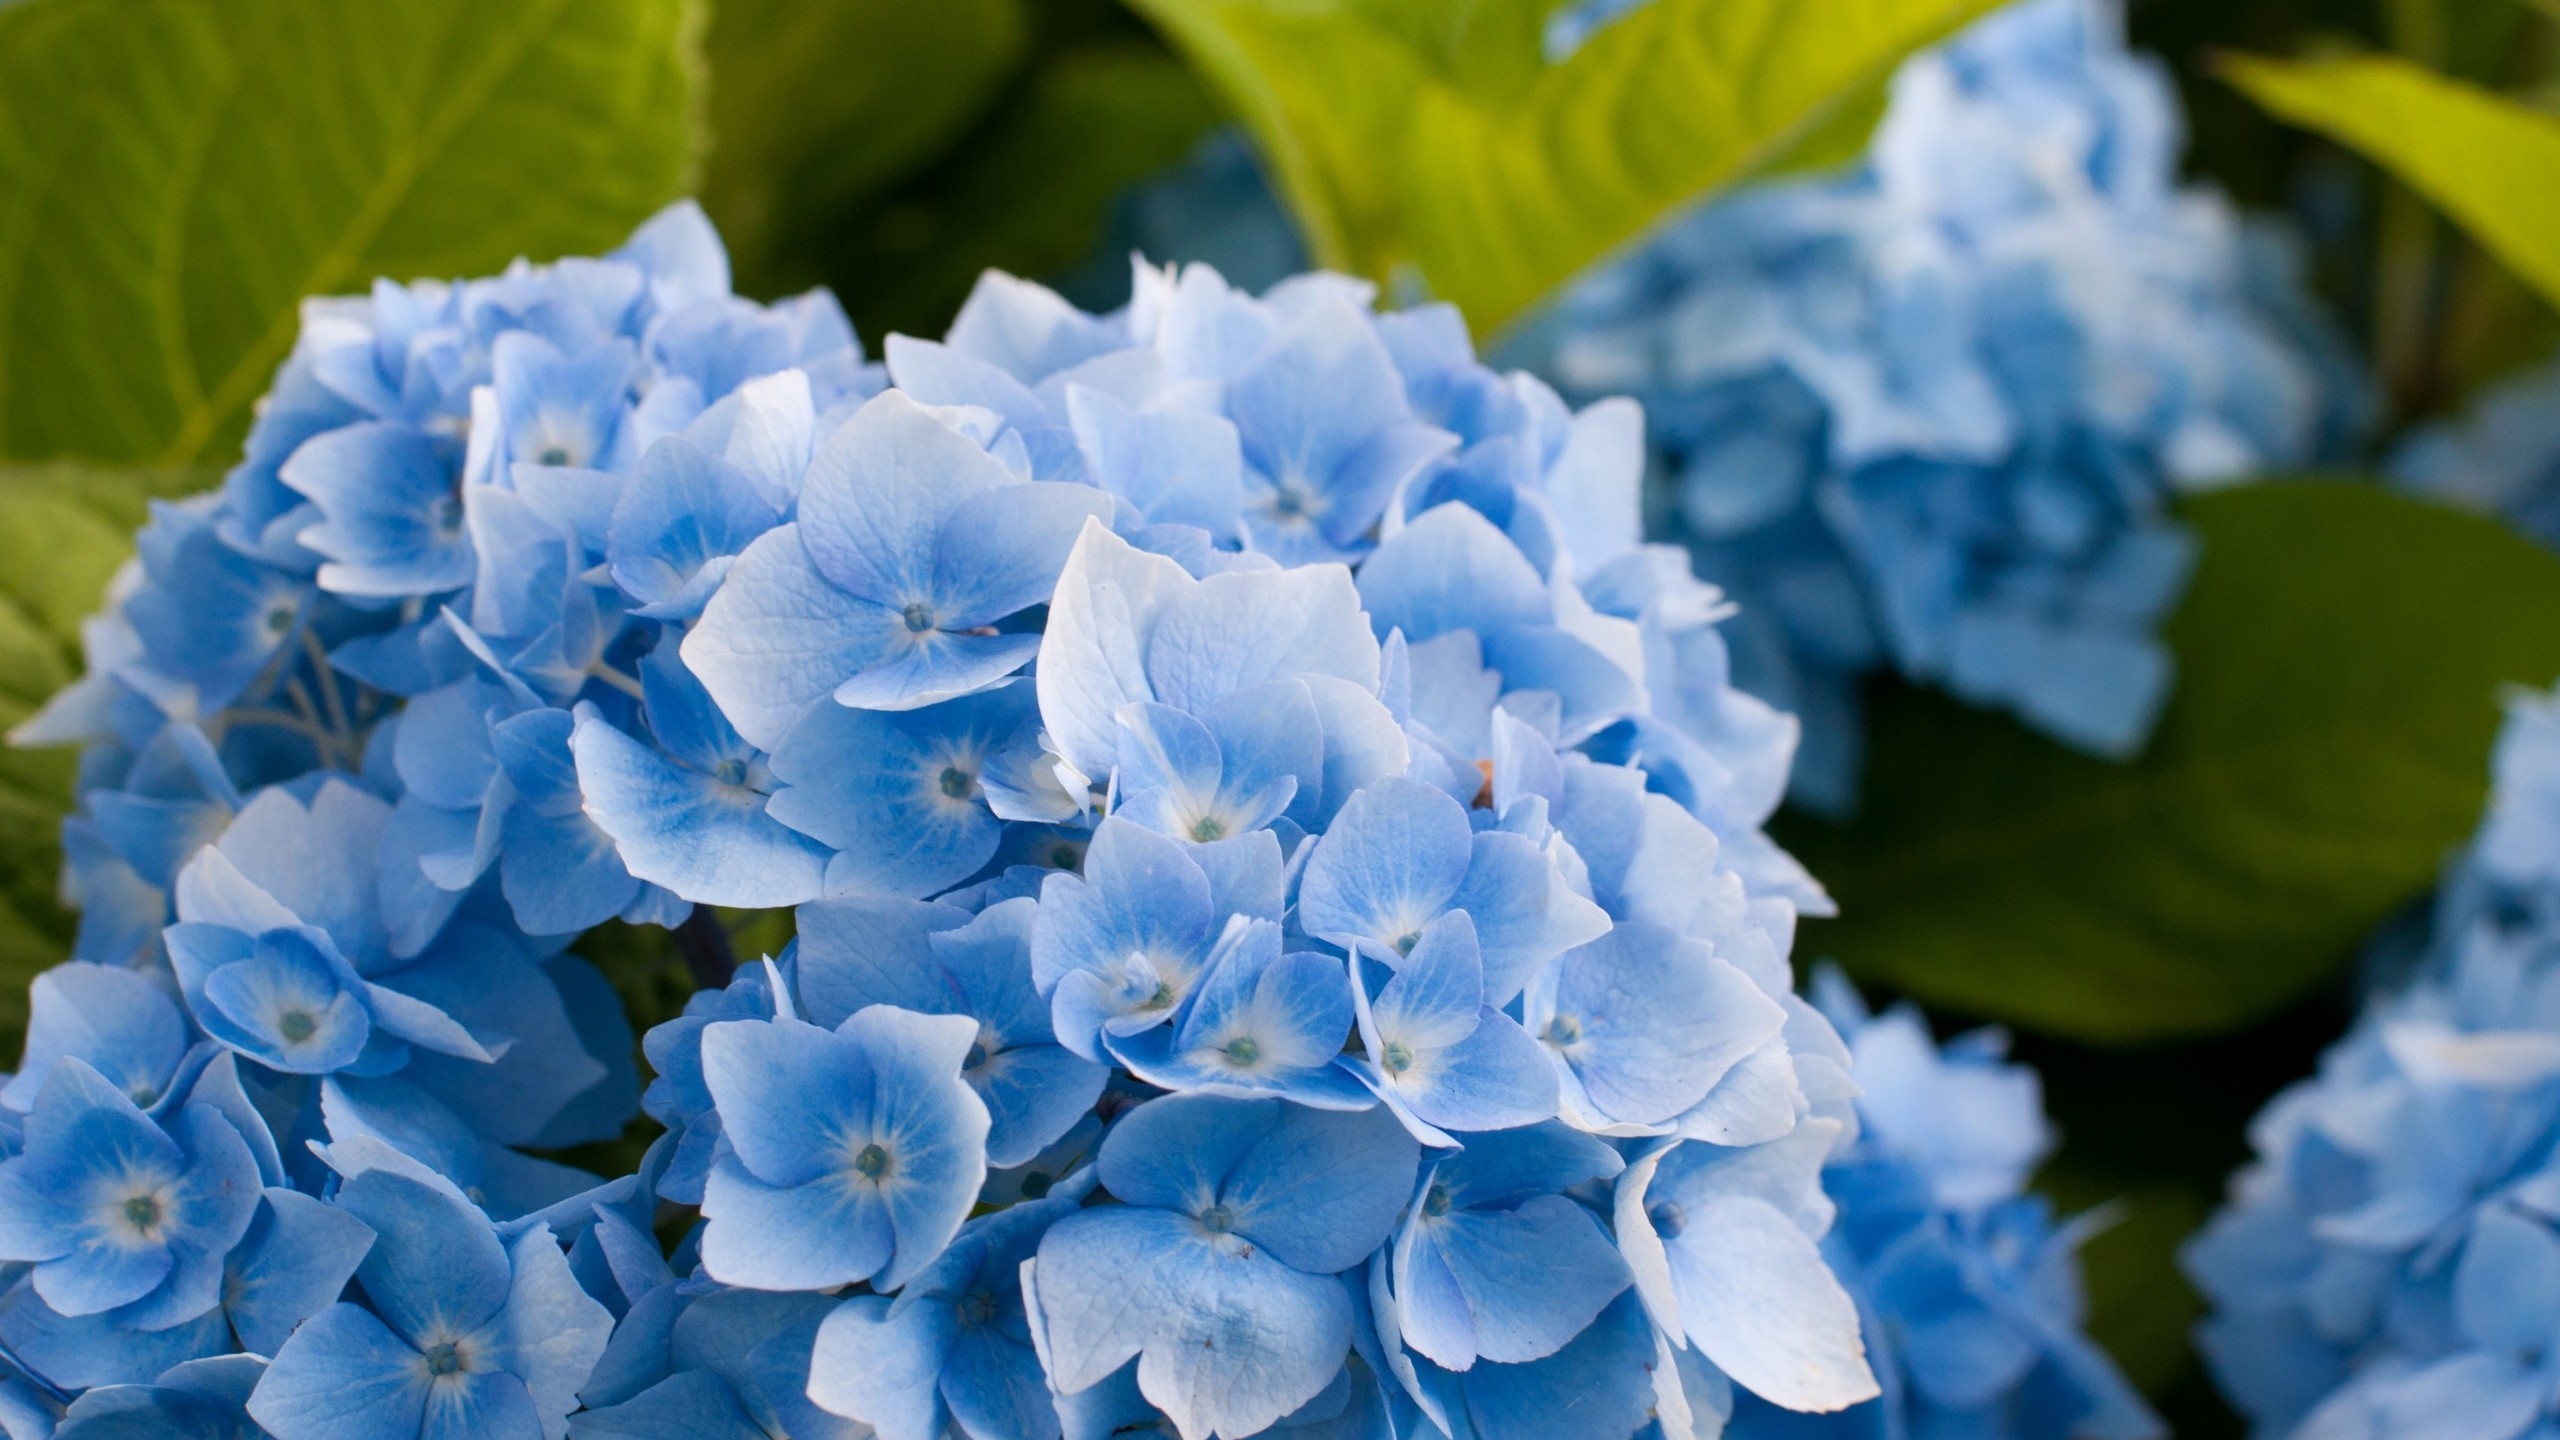 Blue Hydrangea Flower for 2560x1440 HDTV resolution